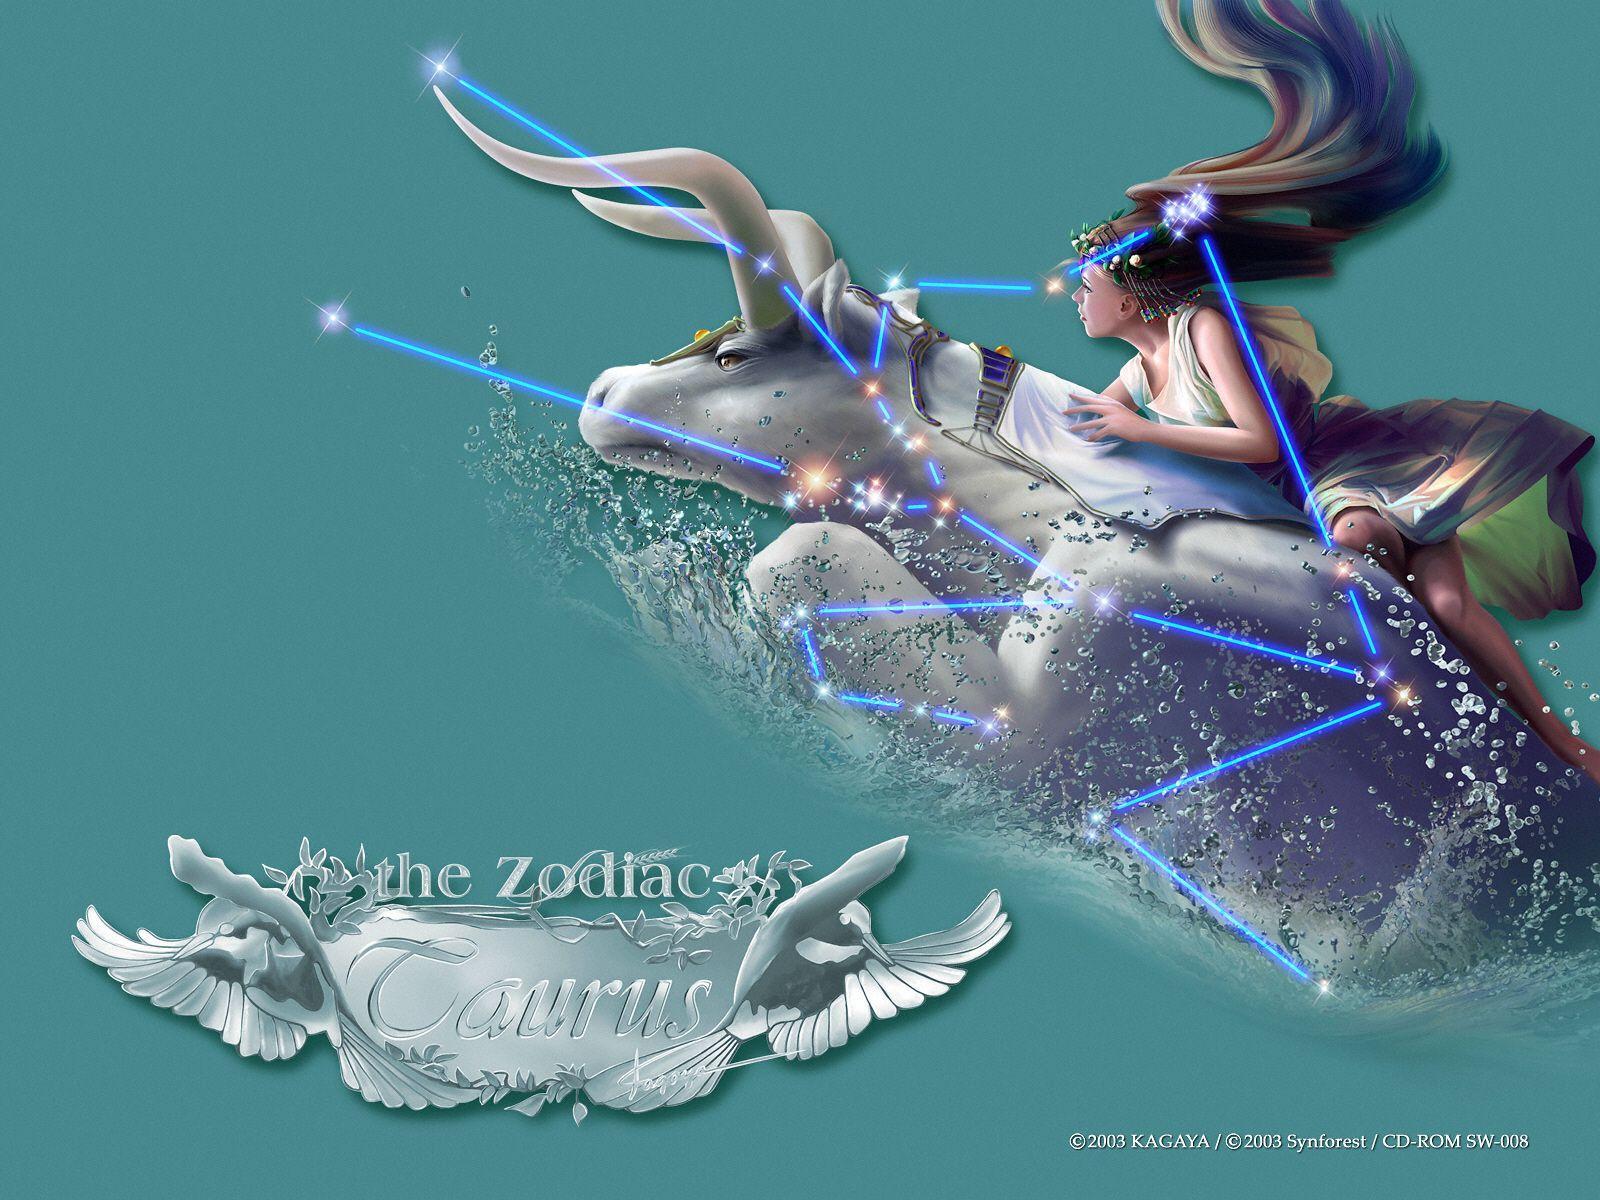 Taurus Zodiac Wallpaper HD Picture. One HD Wallpaper Picture